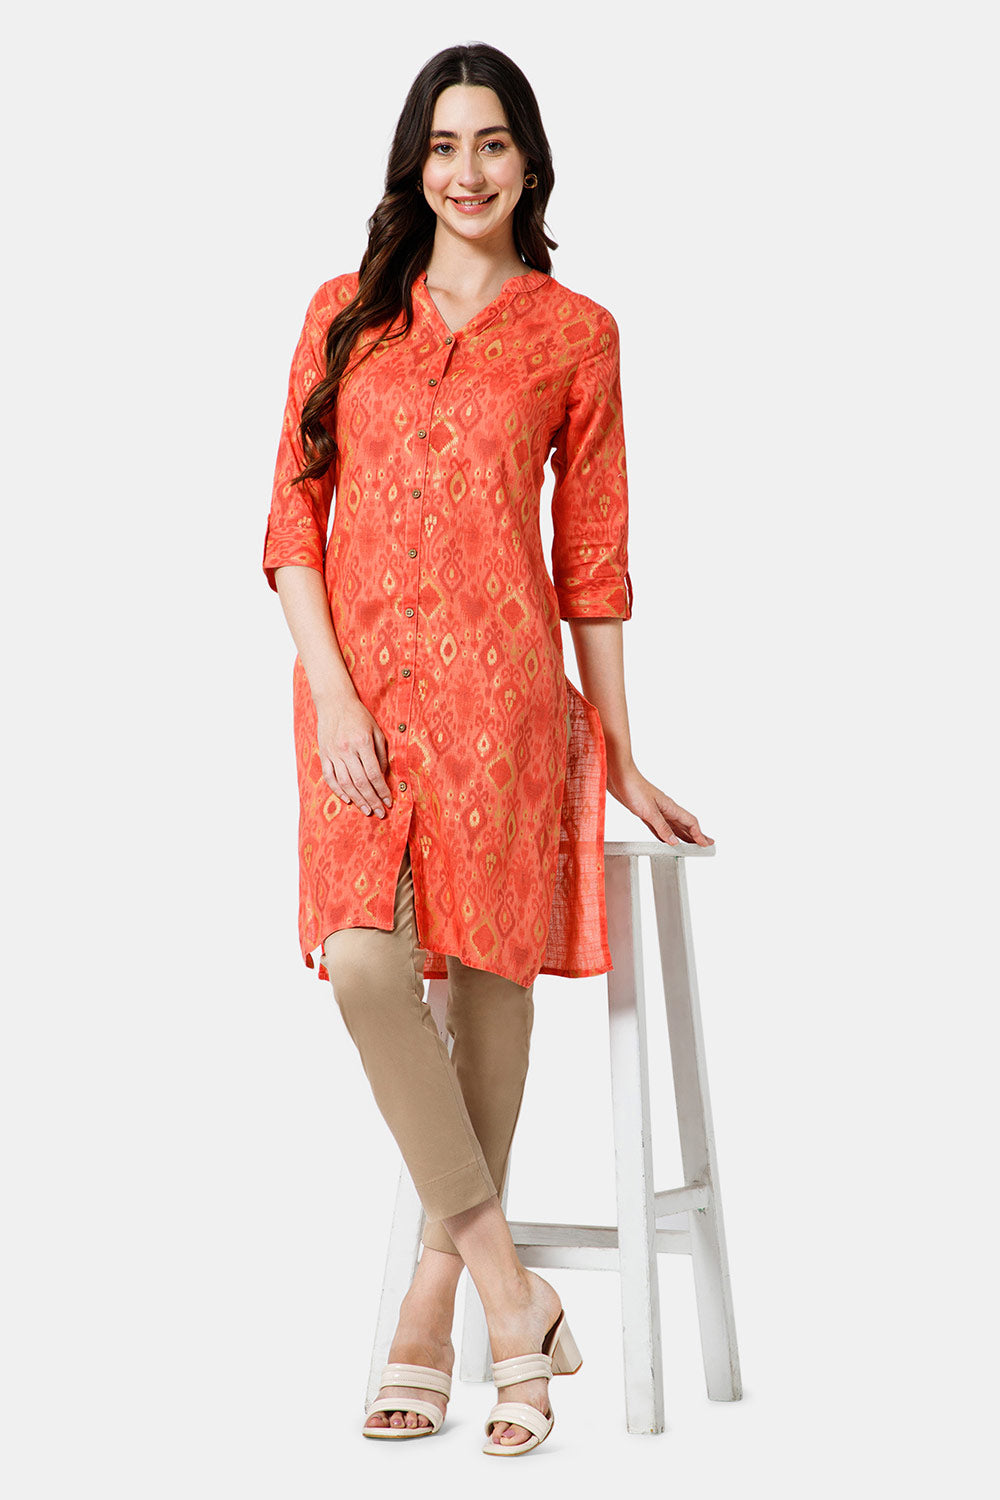 Mythri Women's Ethnic Wear Mandarin collar 3/4 sleeve with front Full placket styling - Red - KU37